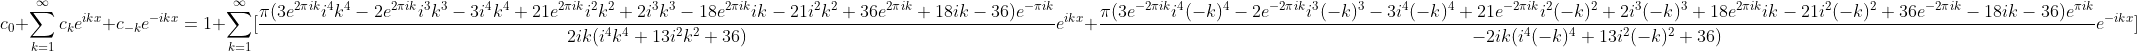 c_{0}+\sum_{k=1}^{\infty}c_{k}e^{ikx}+c_{-k}e^{-ikx}=1+\sum_{k=1}^{\infty}[\frac{\pi (3e^{2\pi ik}i^4k^4-2e^{2\pi ik}i^3k^3-3i^4k^4+21e^{2\pi ik}i^2k^2+2i^3k^3-18e^{2\pi ik}ik-21i^2k^2+36e^{2\pi ik}+18ik-36)e^{-\pi ik}}{2ik(i^4k^4+13i^2k^2+36)}e^{ikx}+\frac{\pi (3e^{-2\pi ik}i^4(-k)^4-2e^{-2\pi ik}i^3(-k)^3-3i^4(-k)^4+21e^{-2\pi ik}i^2(-k)^2+2i^3(-k)^3+18e^{2\pi ik}ik-21i^2(-k)^2+36e^{-2\pi ik}-18ik-36)e^{\pi ik}}{-2ik(i^4(-k)^4+13i^2(-k)^2+36)}e^{-ikx}]